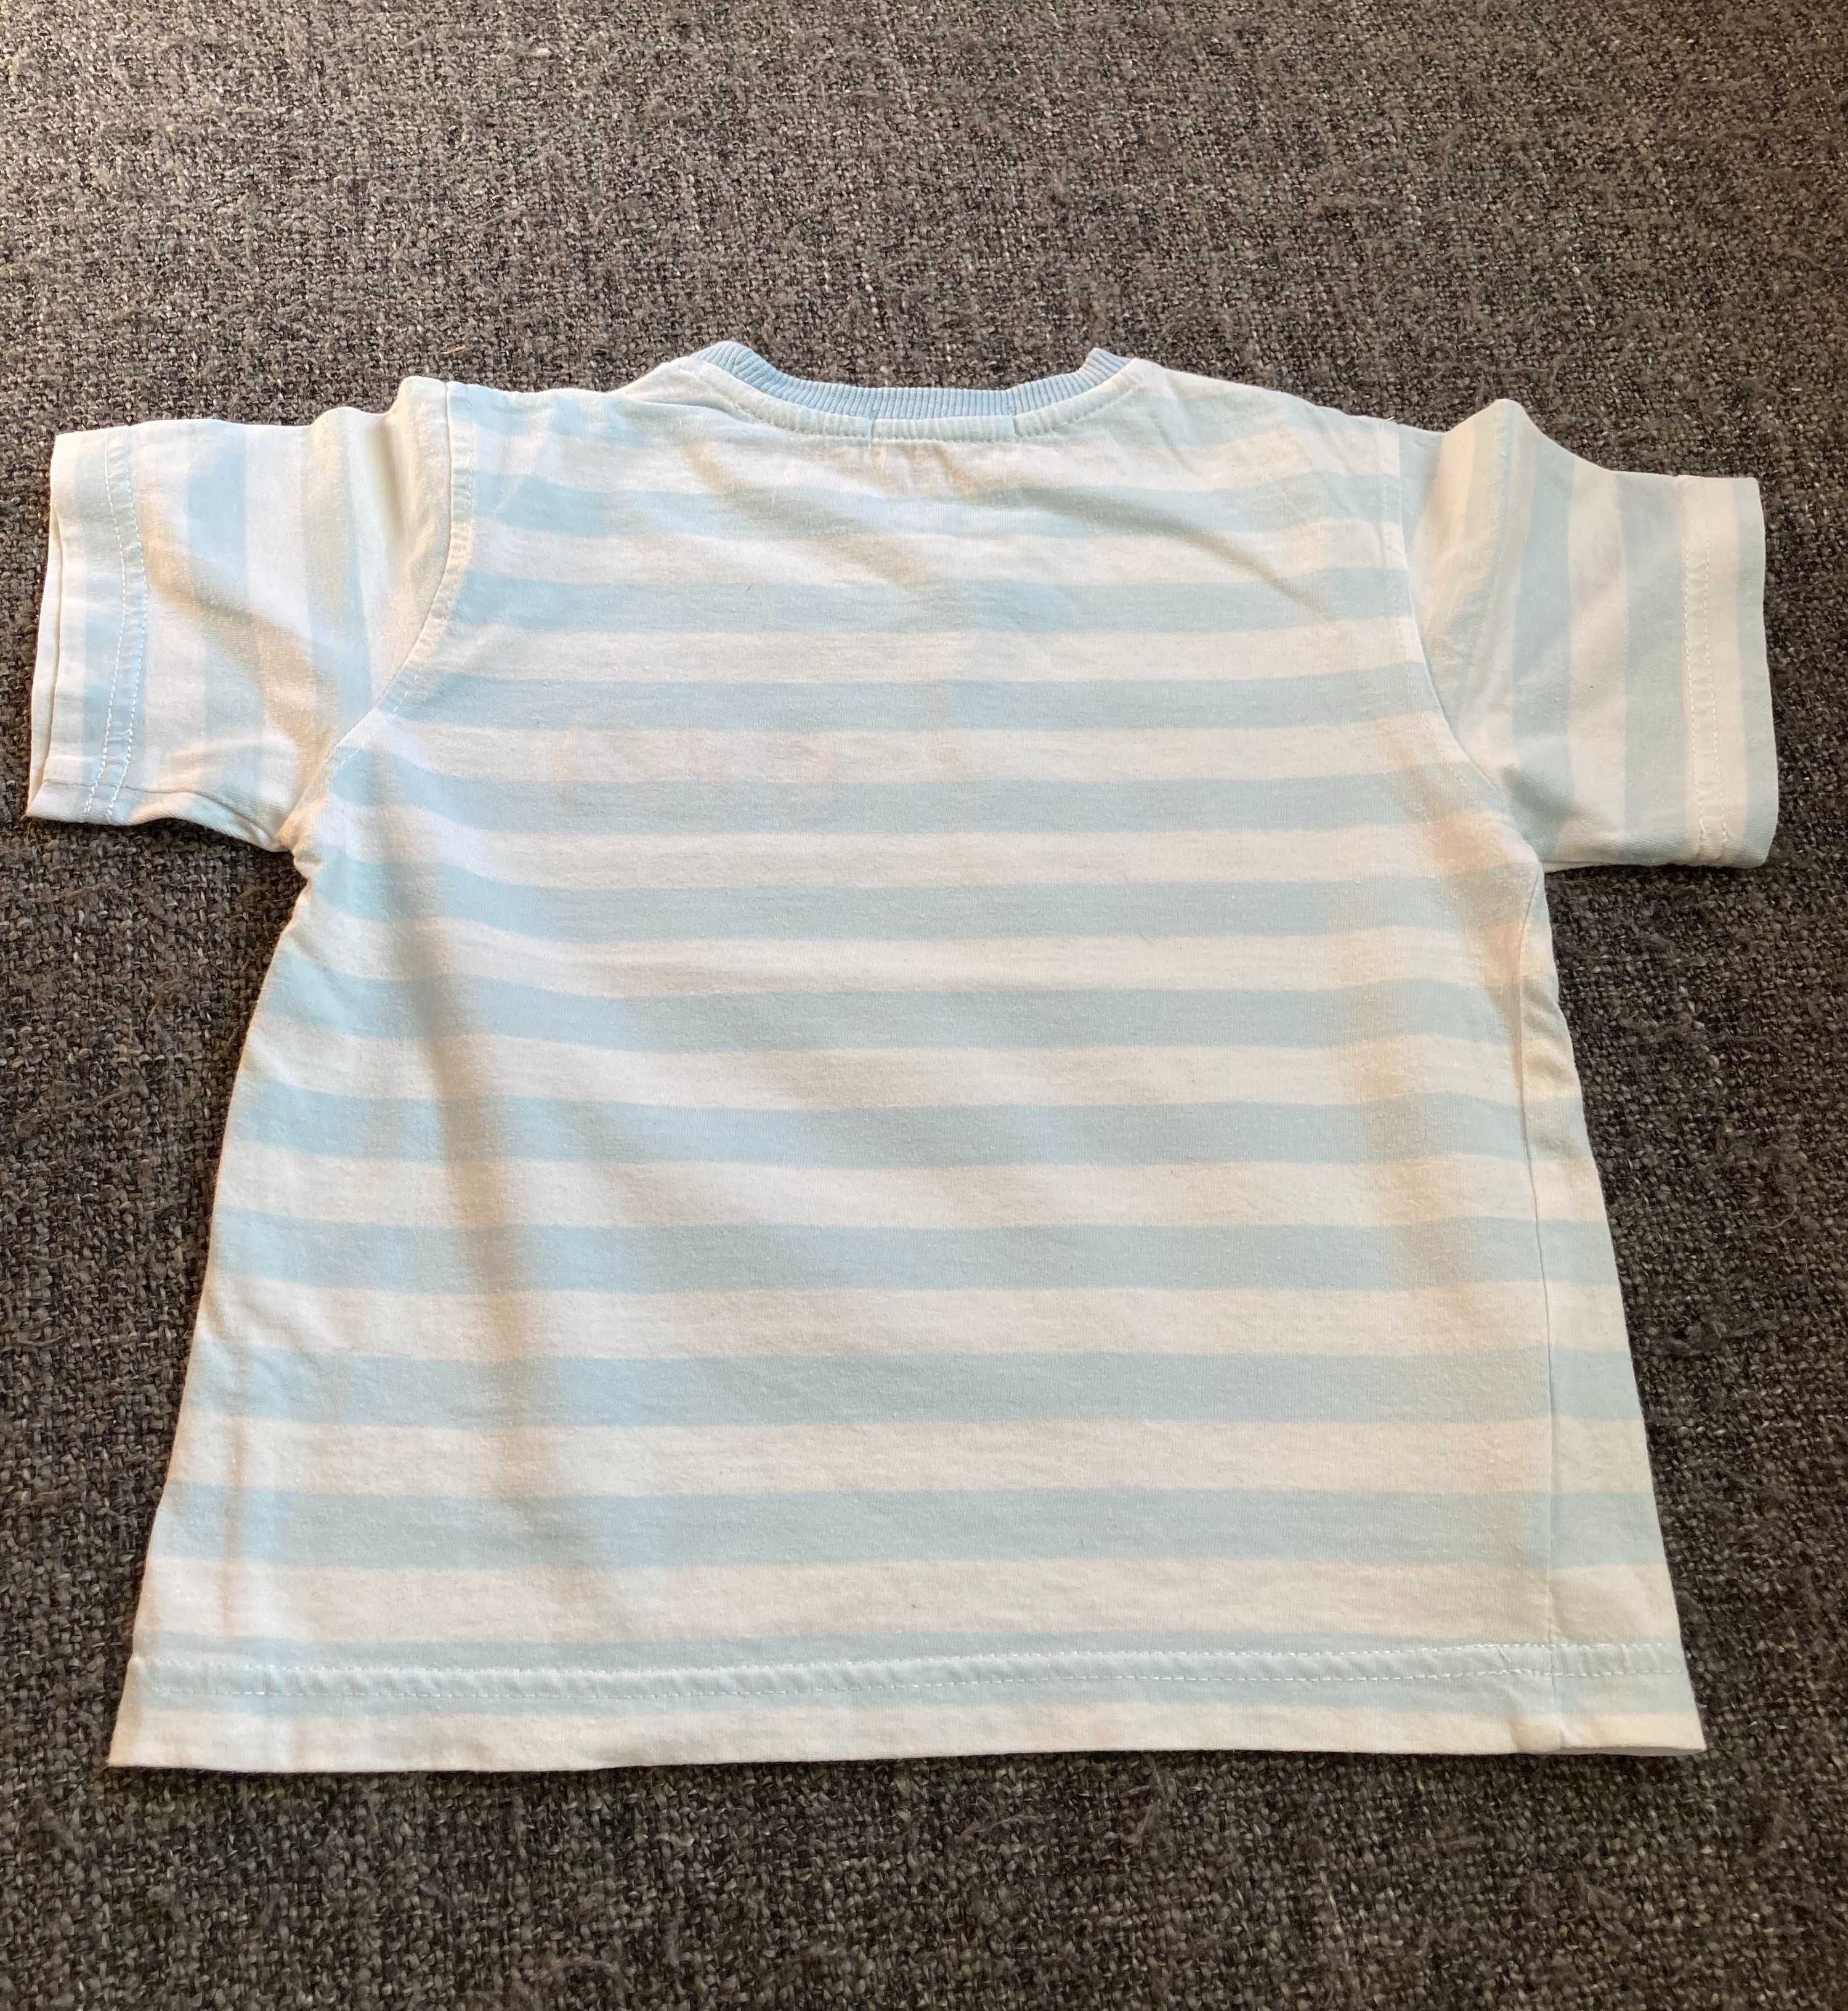 Biało-błękitny t-shirt w paski Mariquita, r. 92